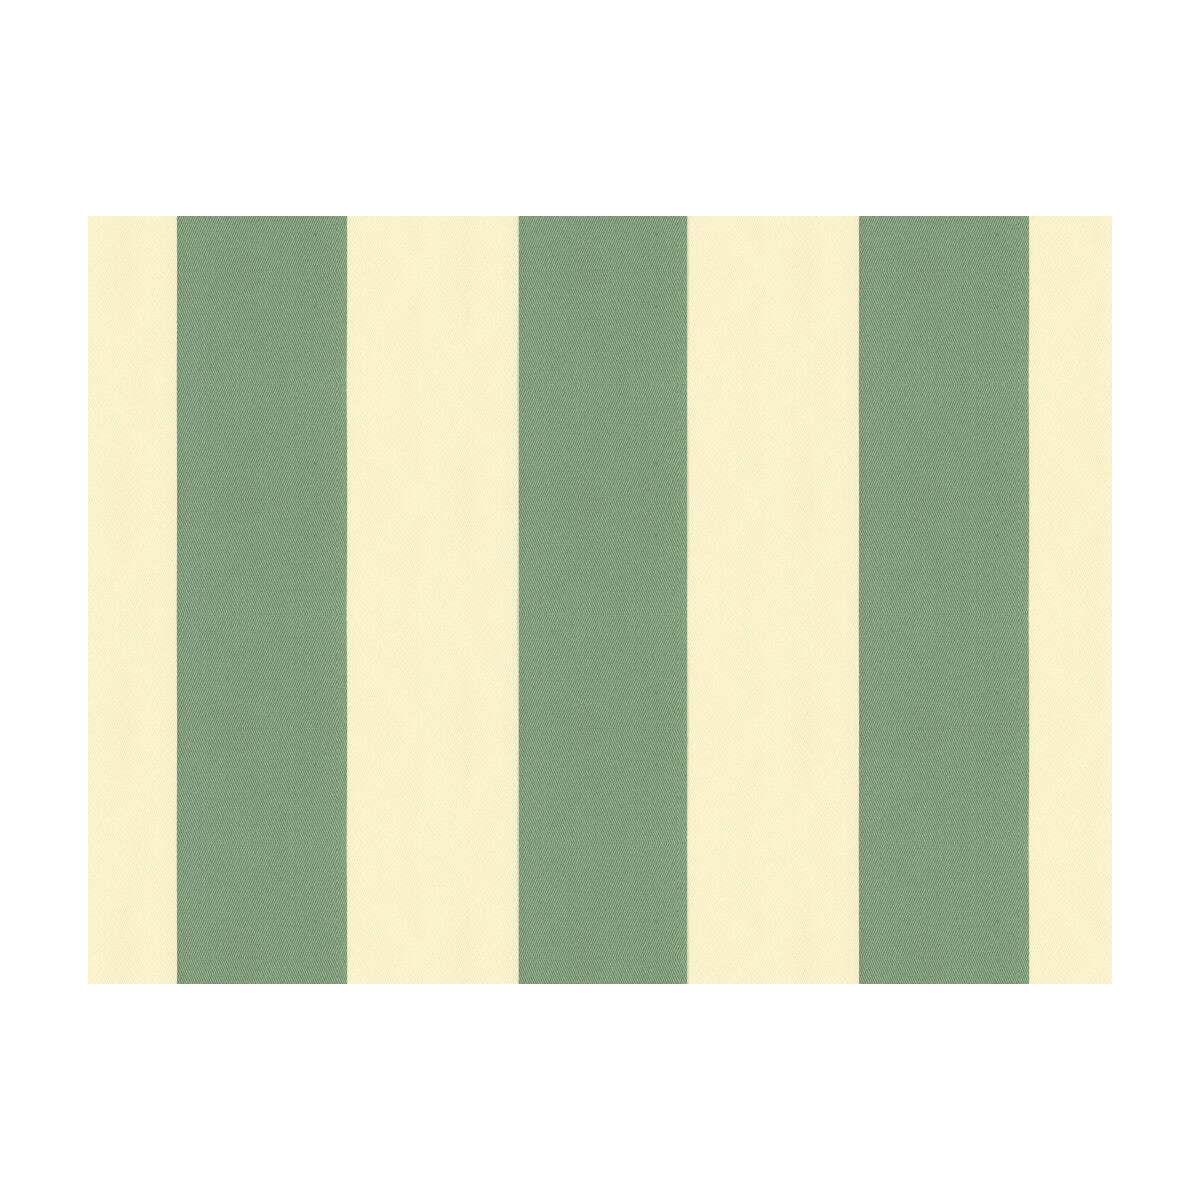 Kravet Smart fabric in 33385-3 color - pattern 33385.3.0 - by Kravet Smart in the Soleil collection